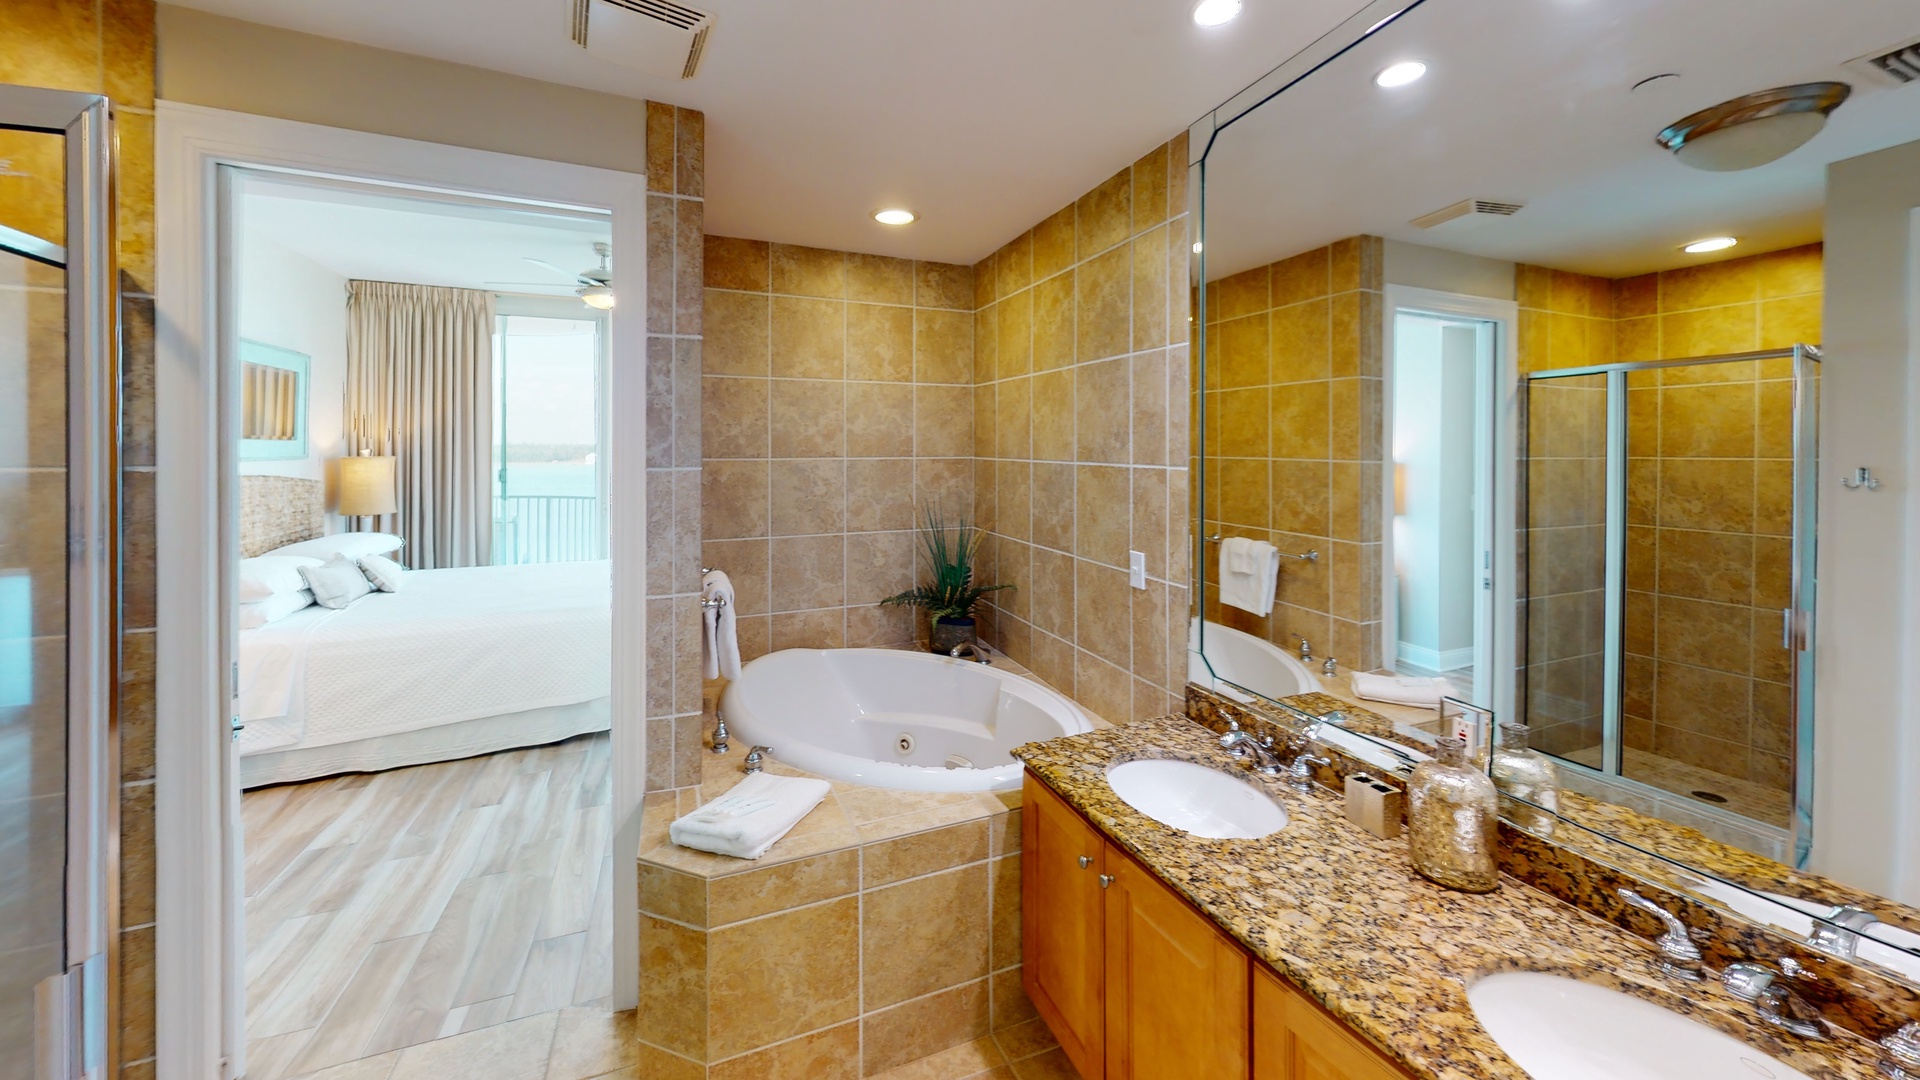 Bedroom 3 has jacuzzi tub, walk-in shower and double vanity